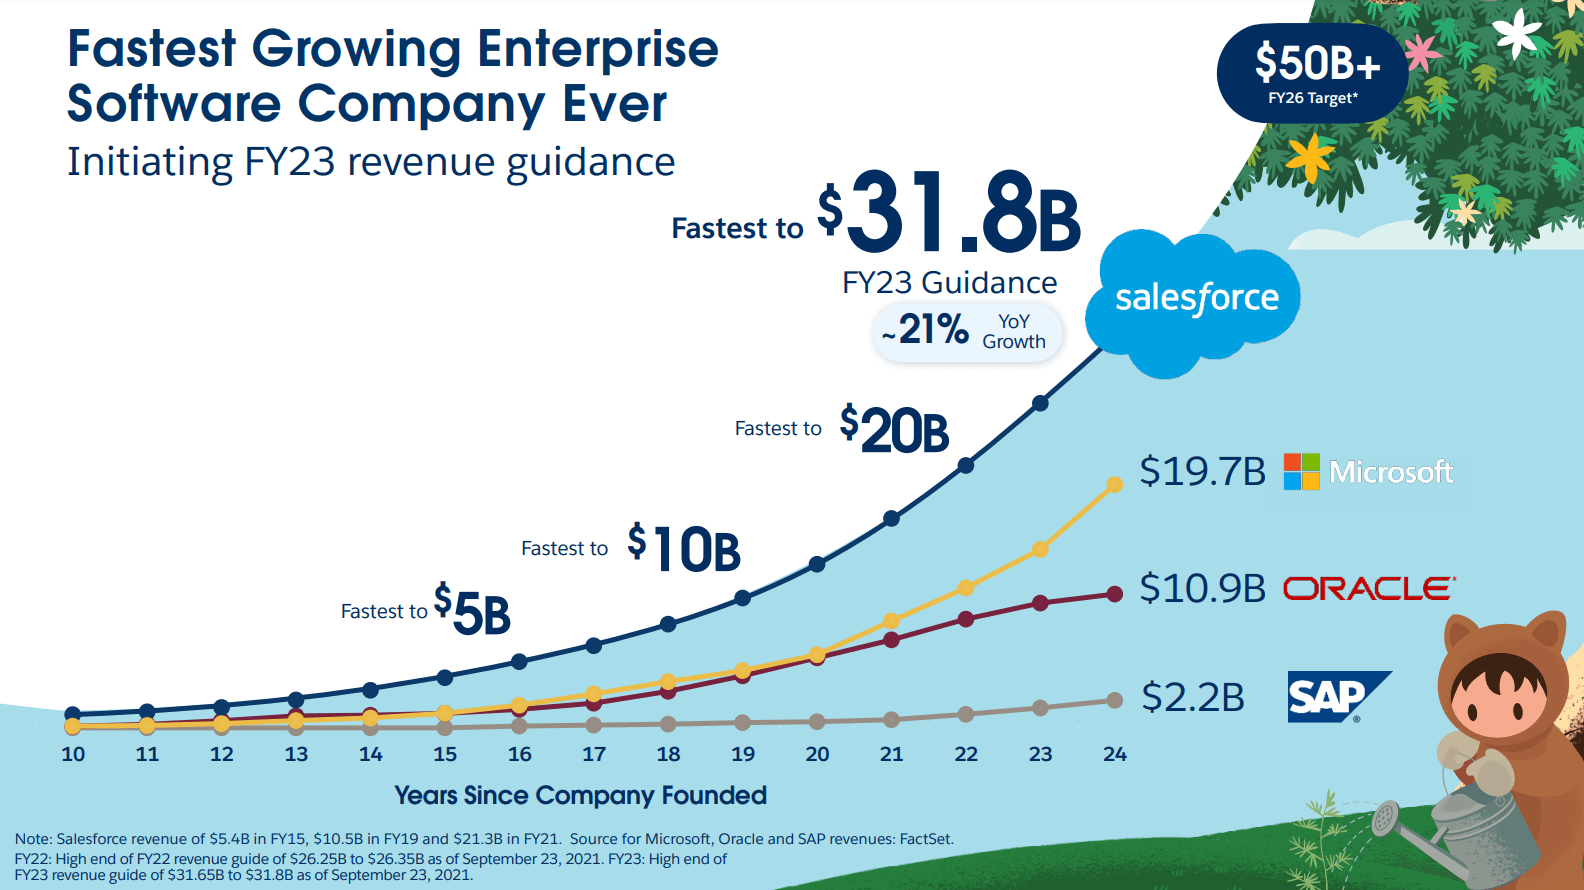 salesforce annual revenue